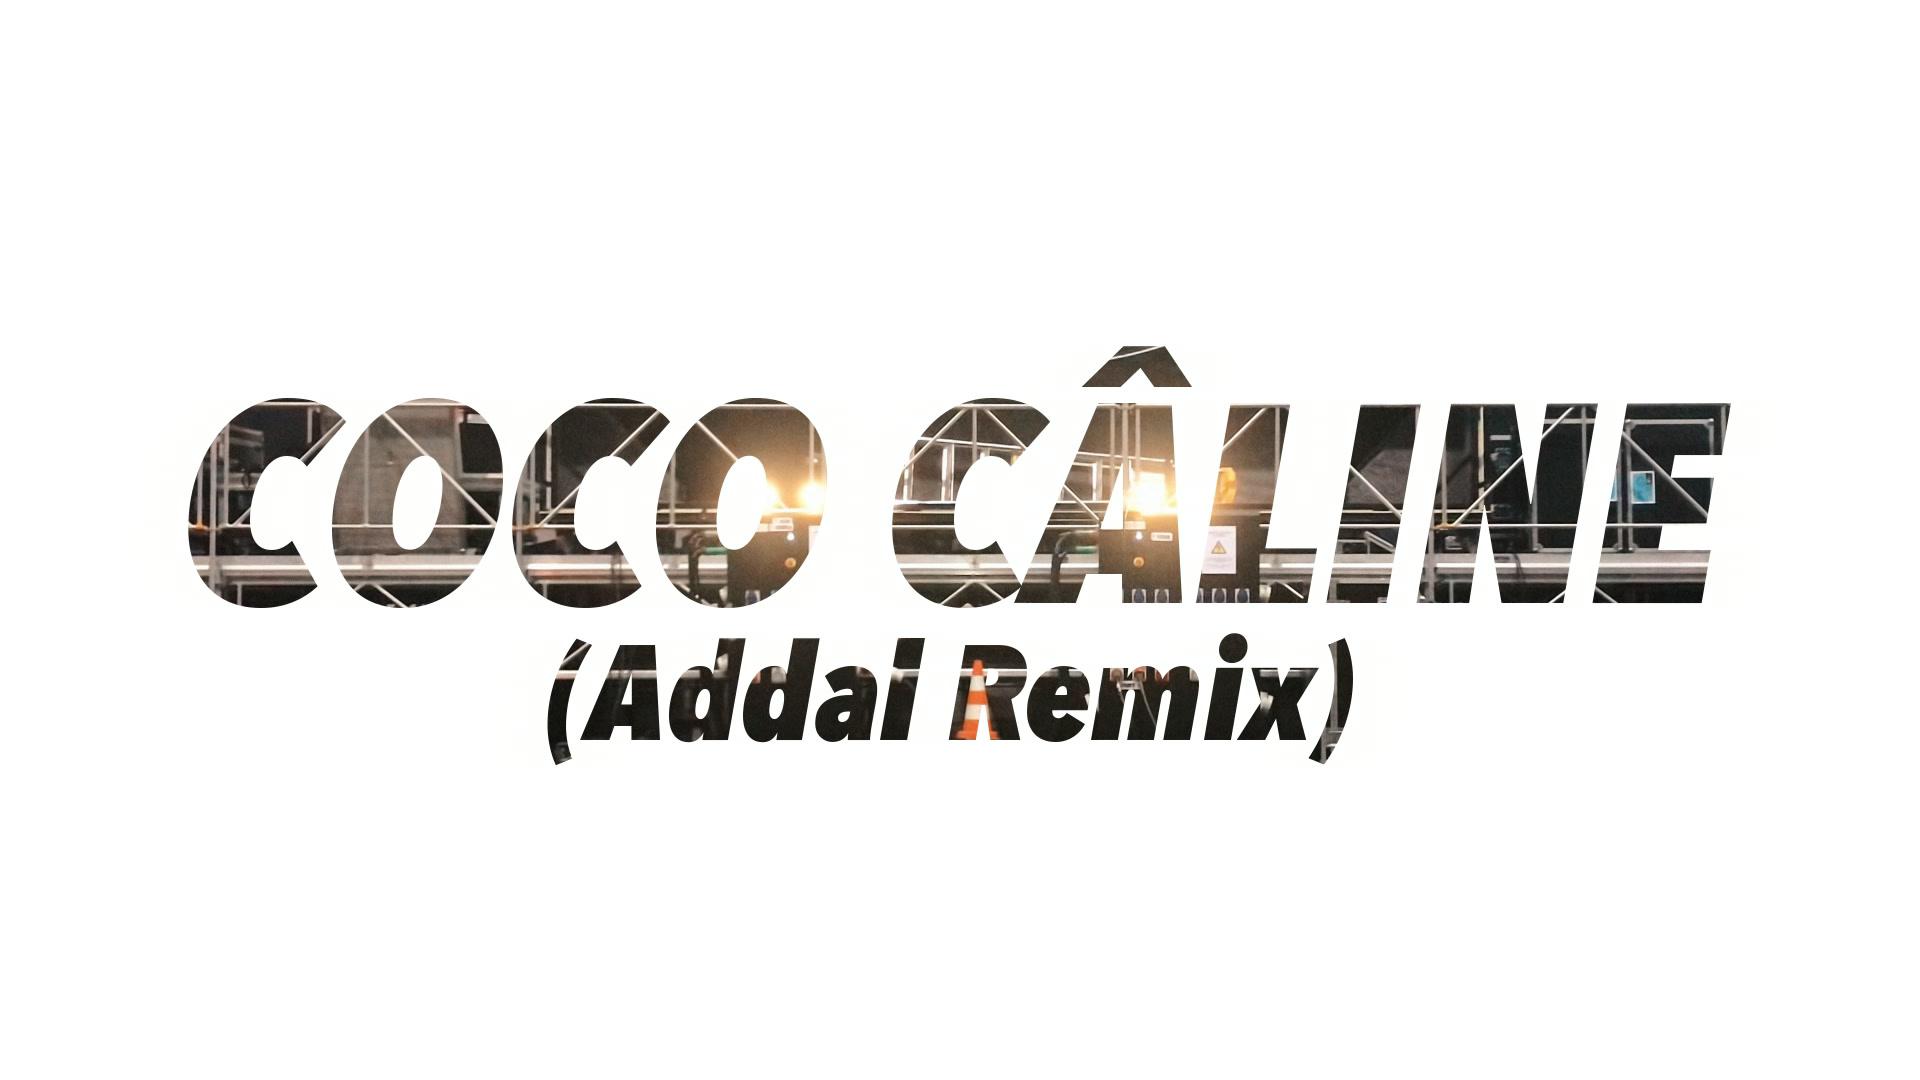 Julien Doré - Coco Câline (Addal Remix) (Alternative Video)